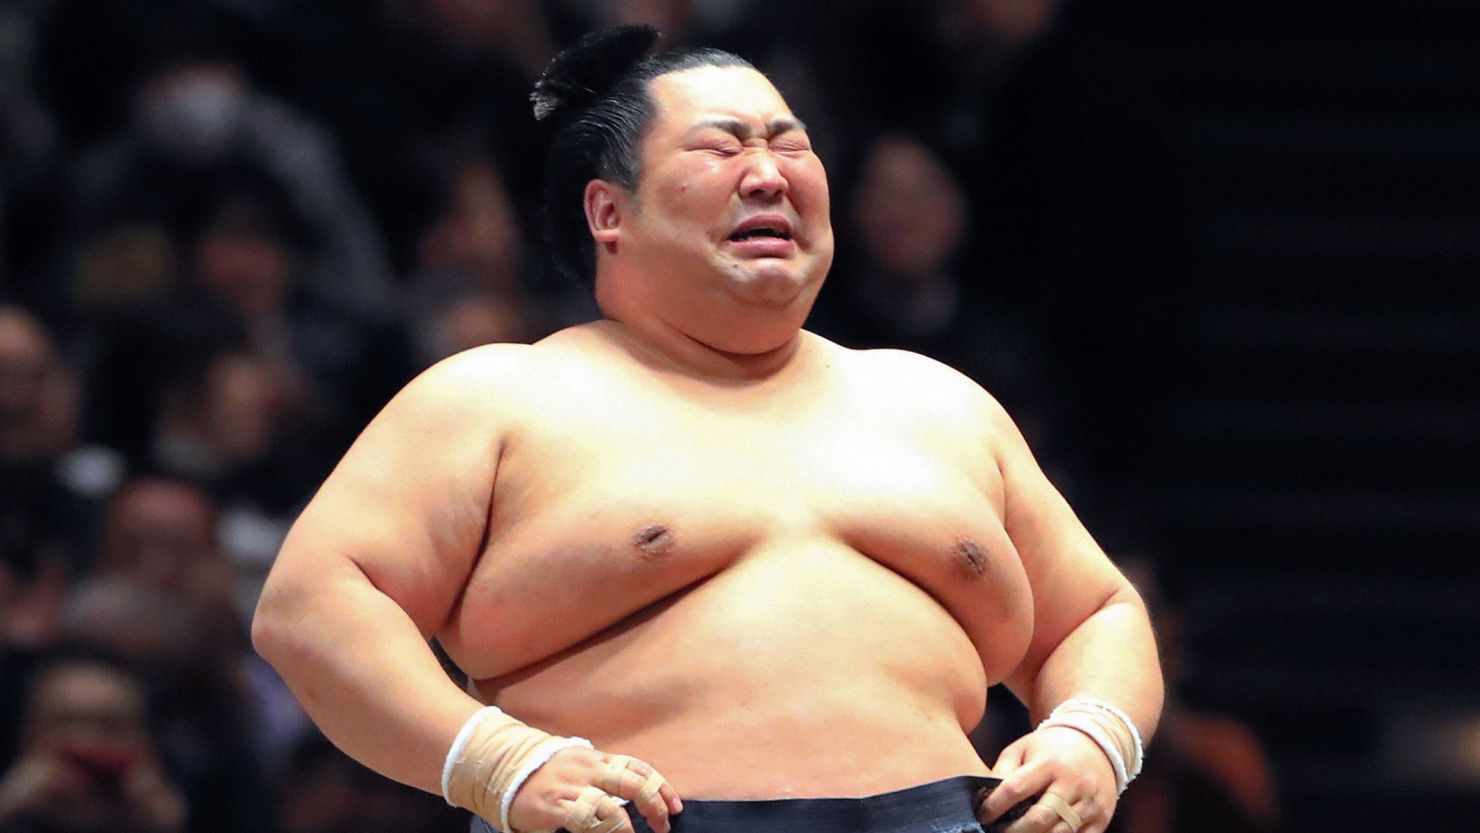 Tokushoryu sheds tears of joy after winning the tournament at the Ryogoku Kokugikan in Tokyo, Japan. 